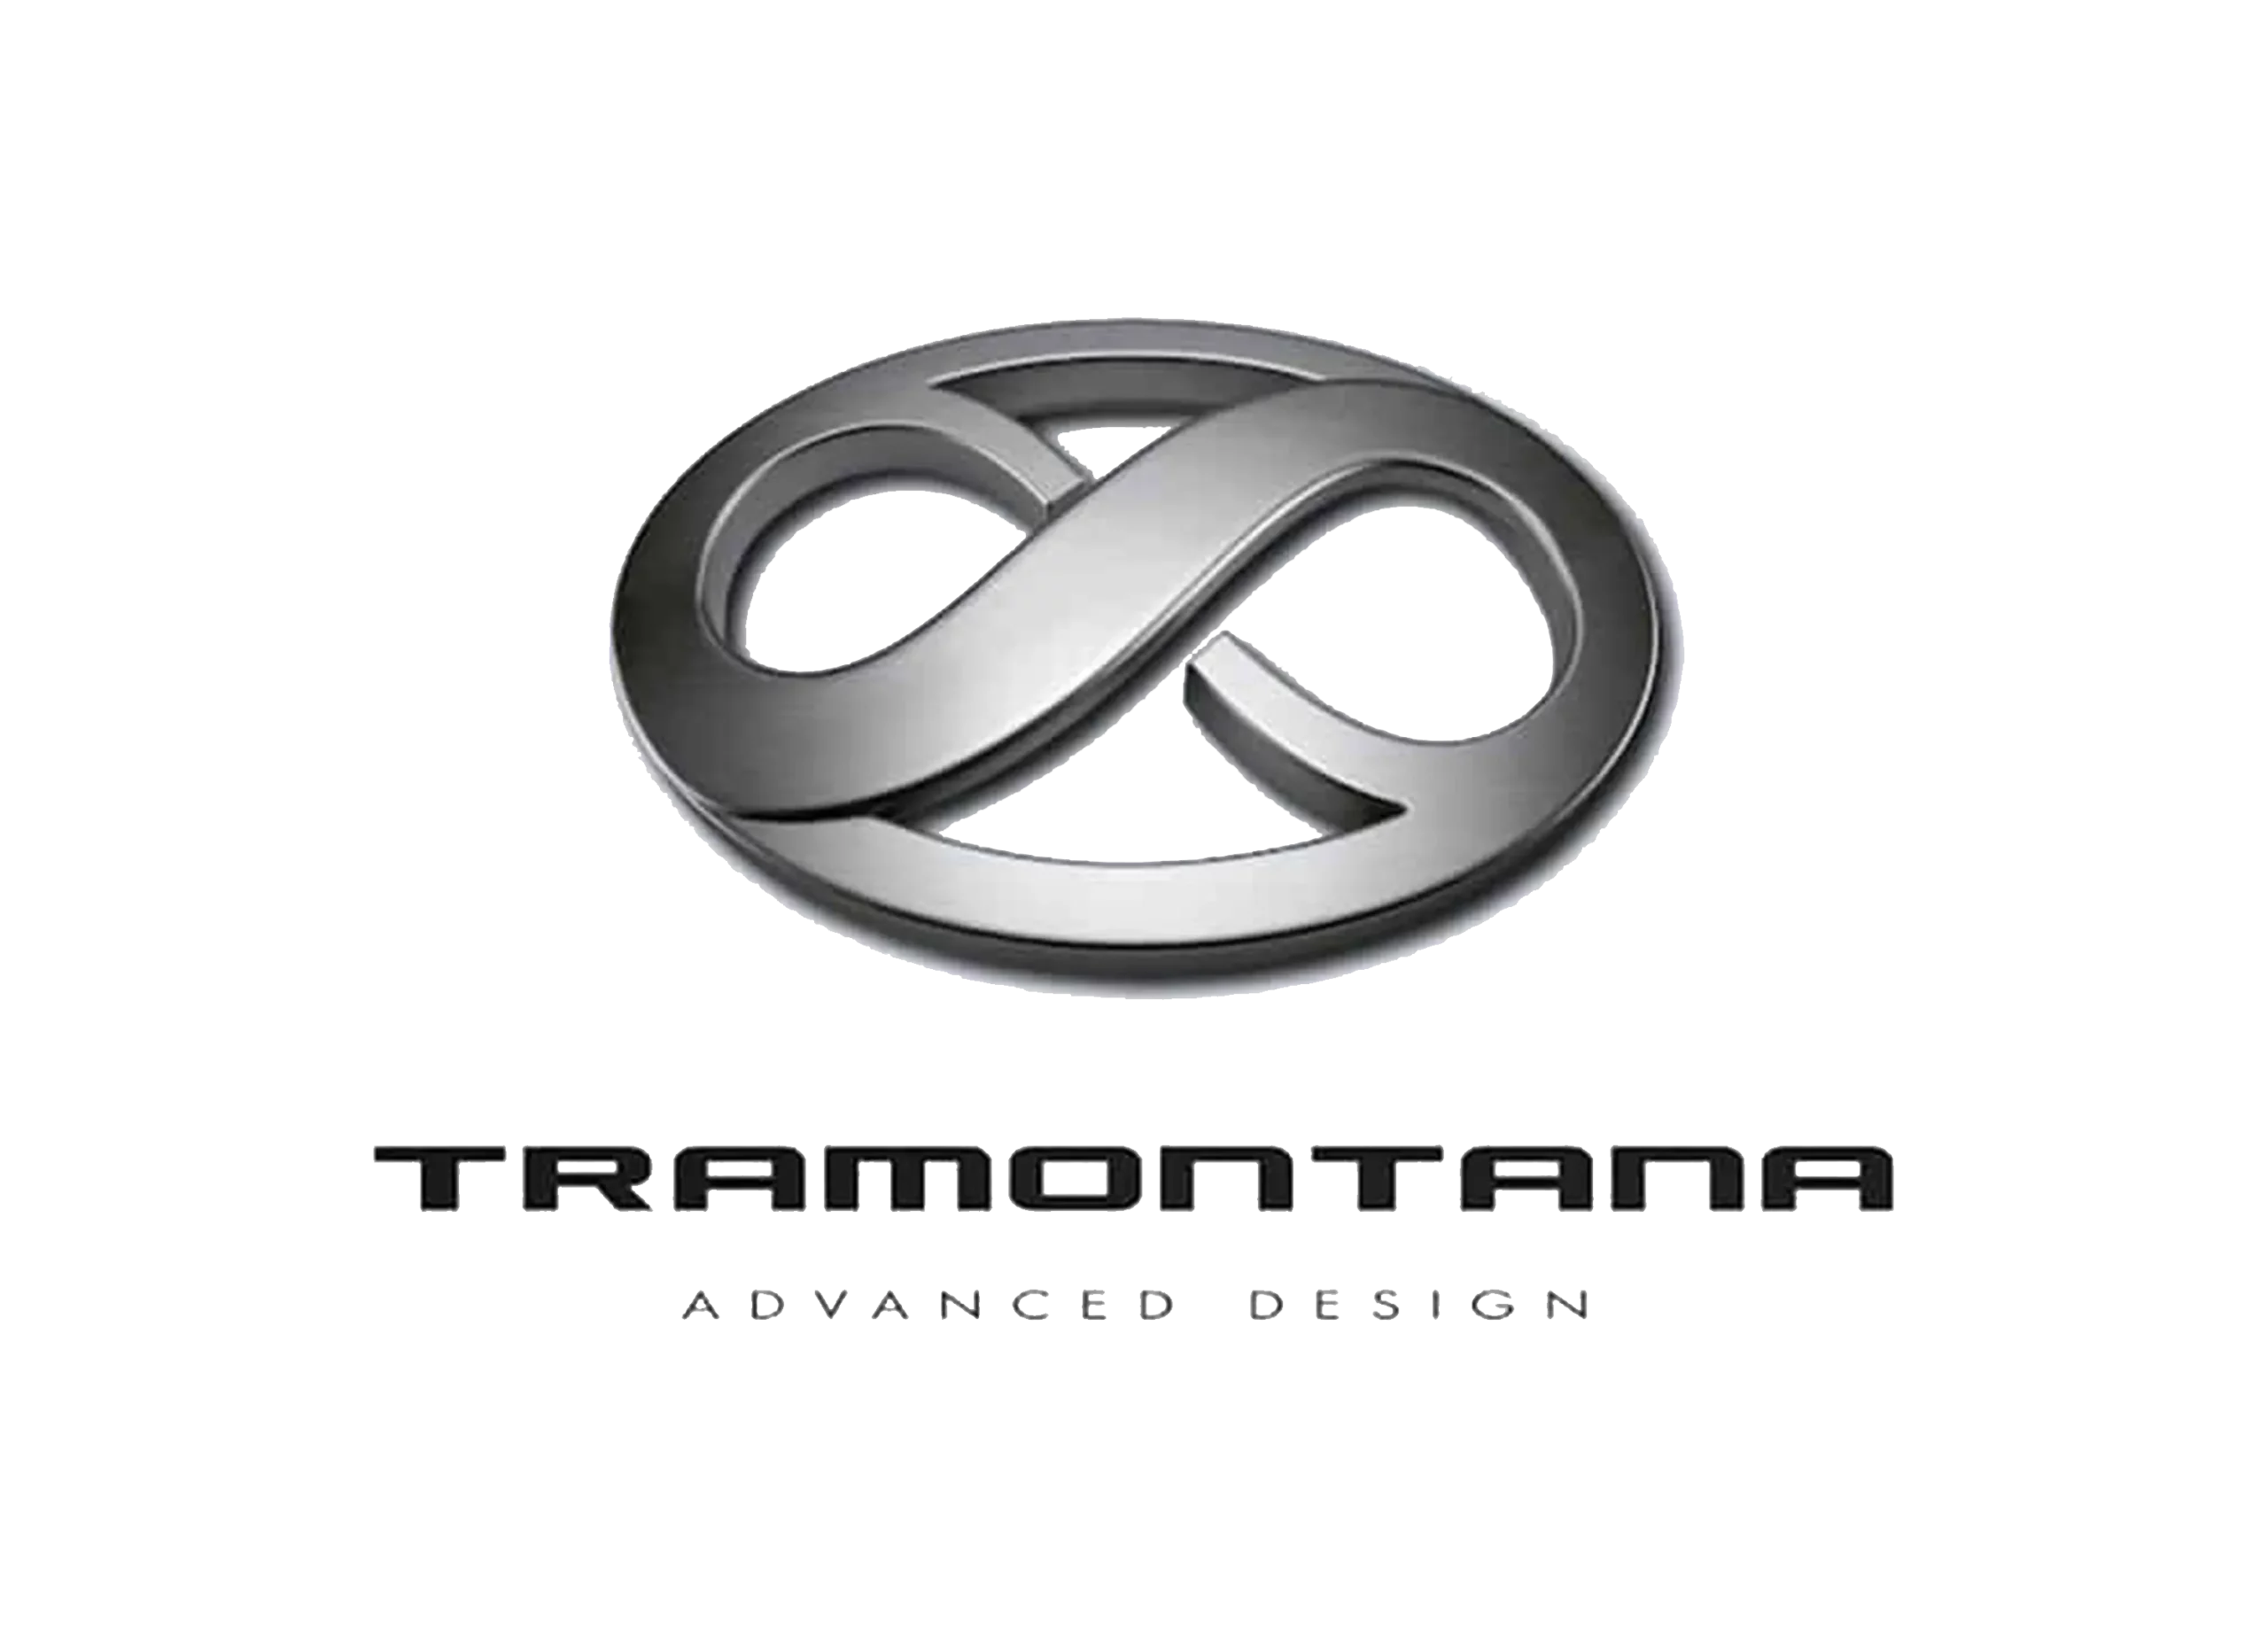 Tramontana logo 2005-present